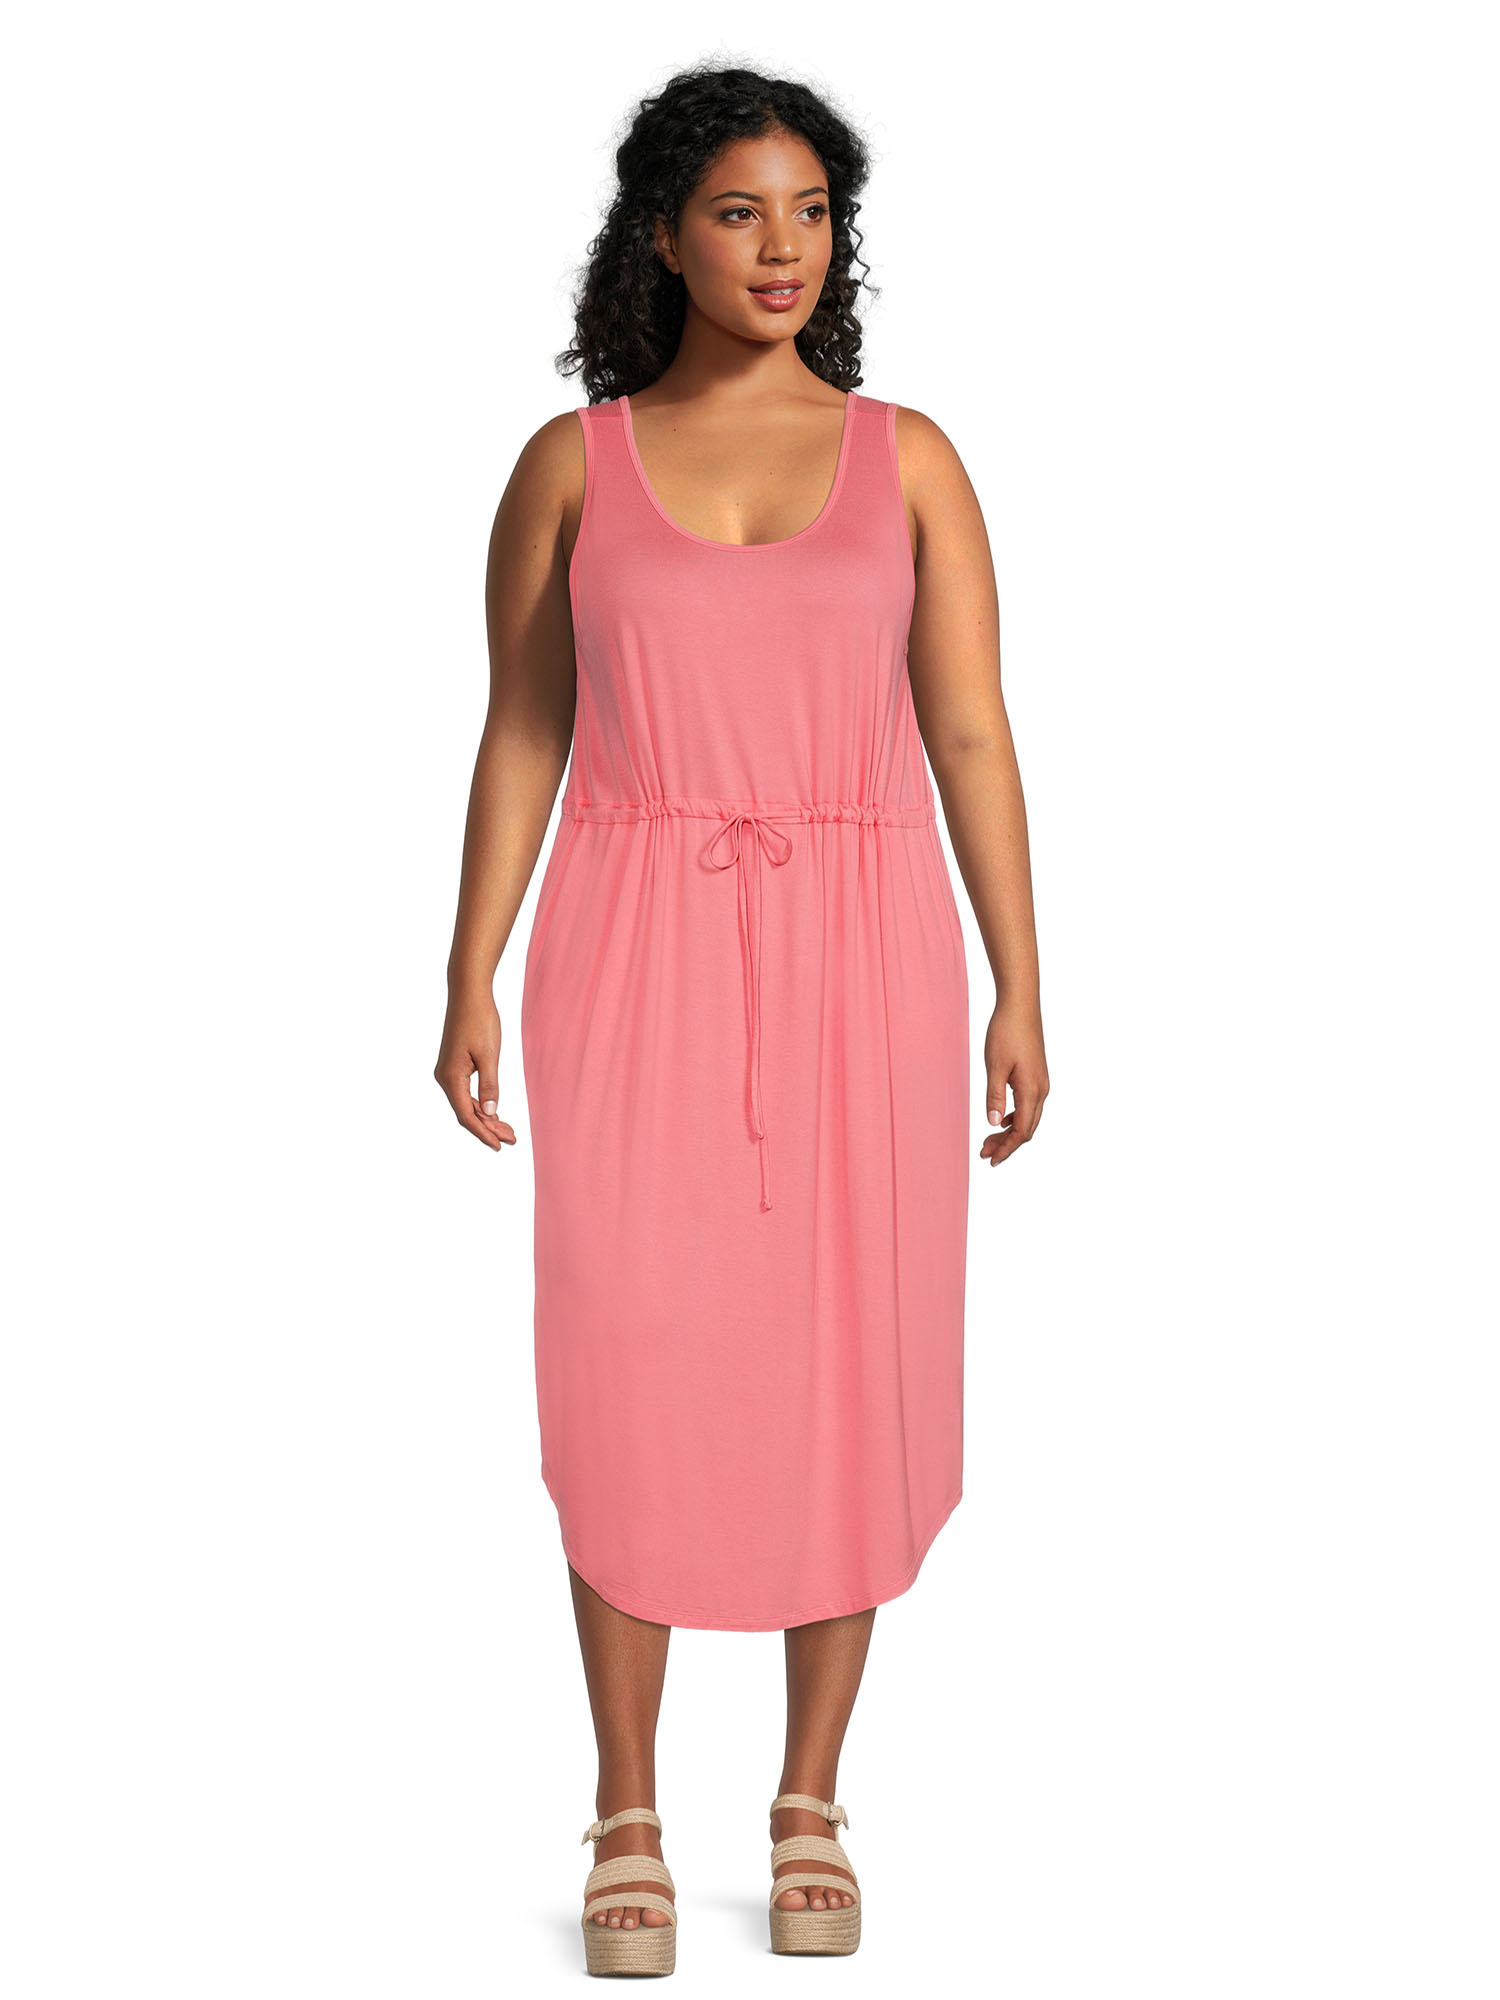 Terra & Sky Women's Plus Size Drawstring Waist Tank Dress - image 2 of 5